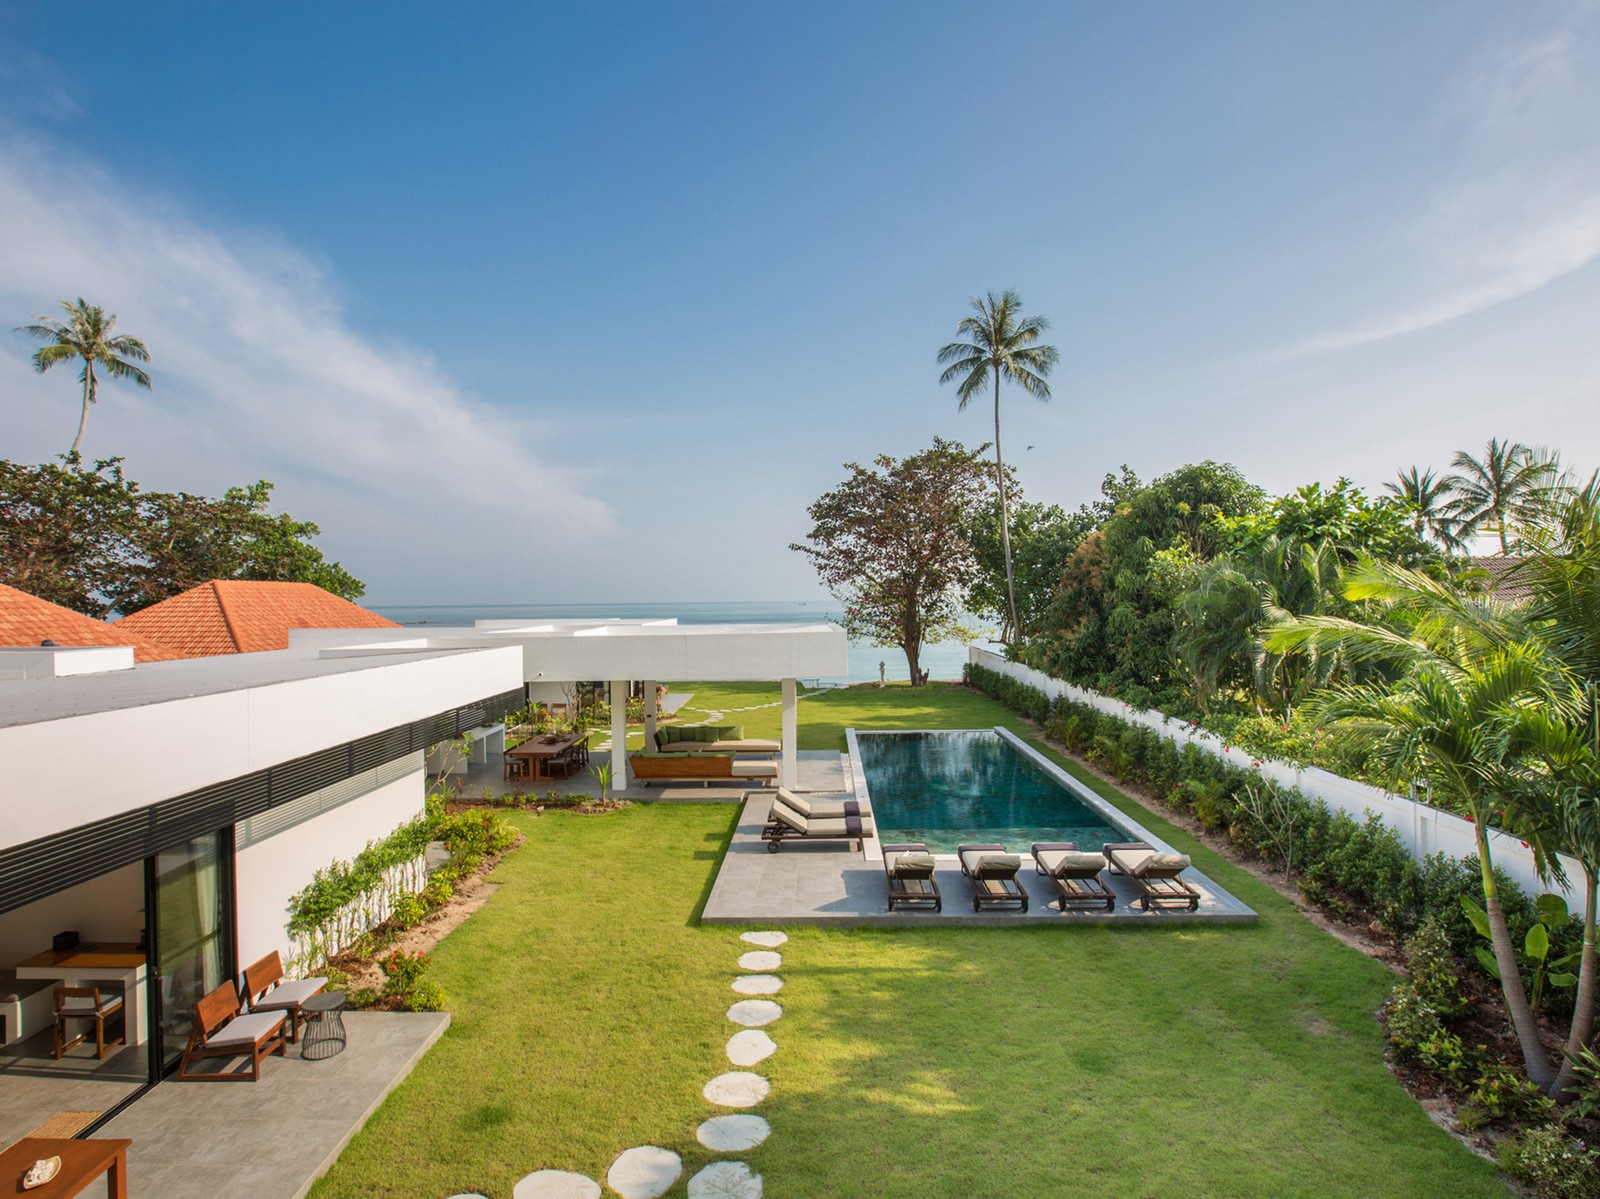 14 villa thansamaay luxurious beachfront getaway